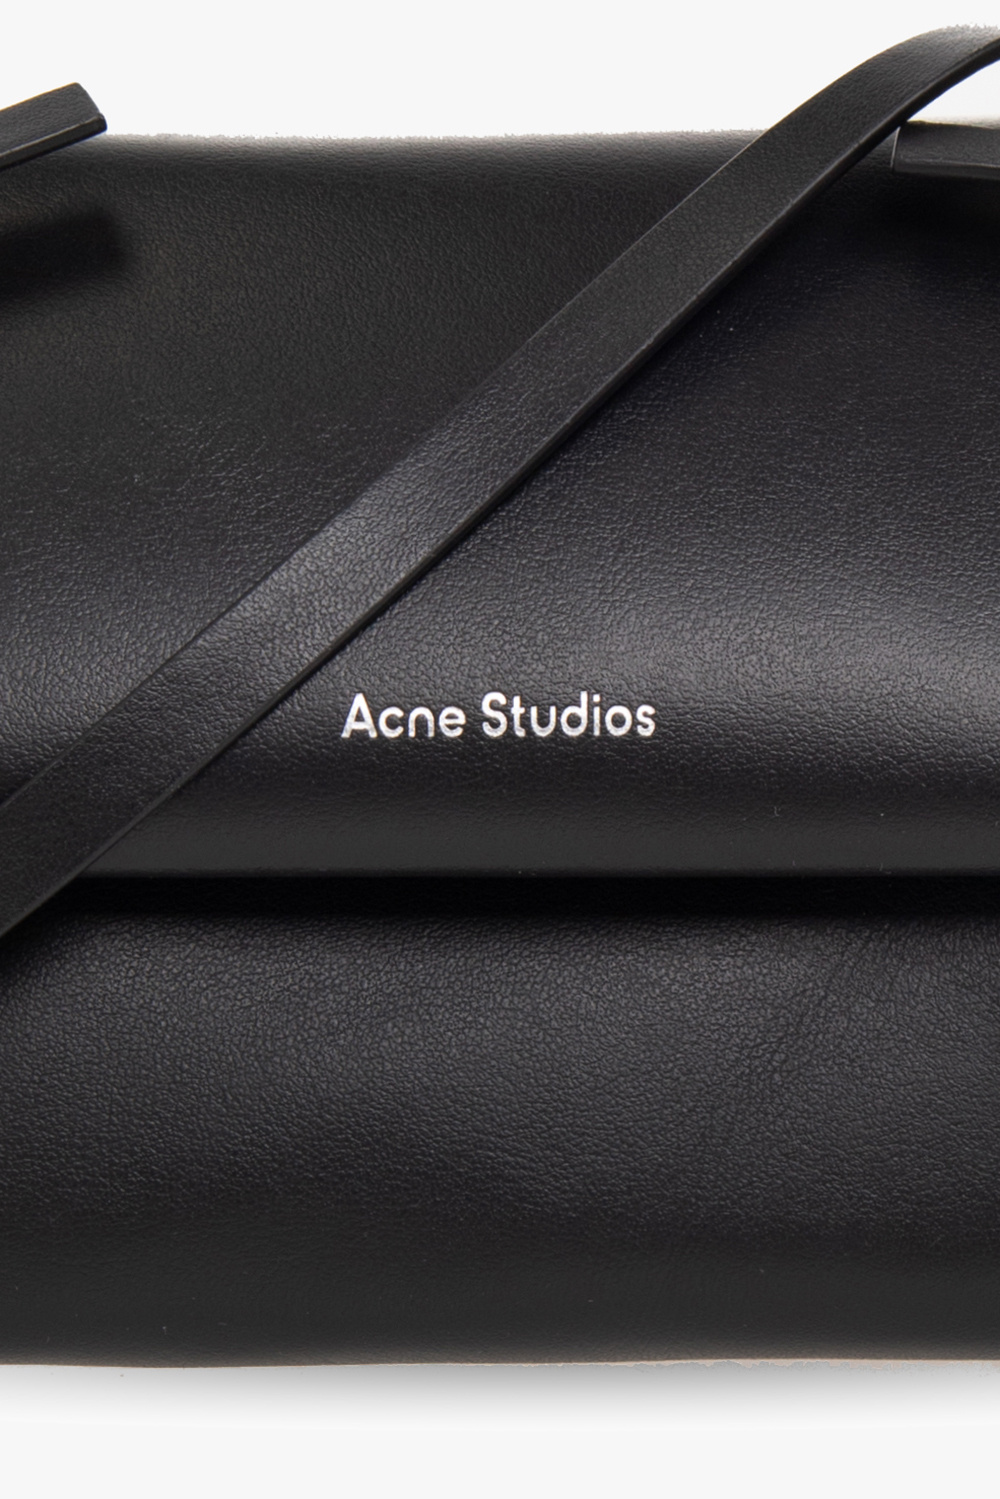 Acne Studios future pro backpack